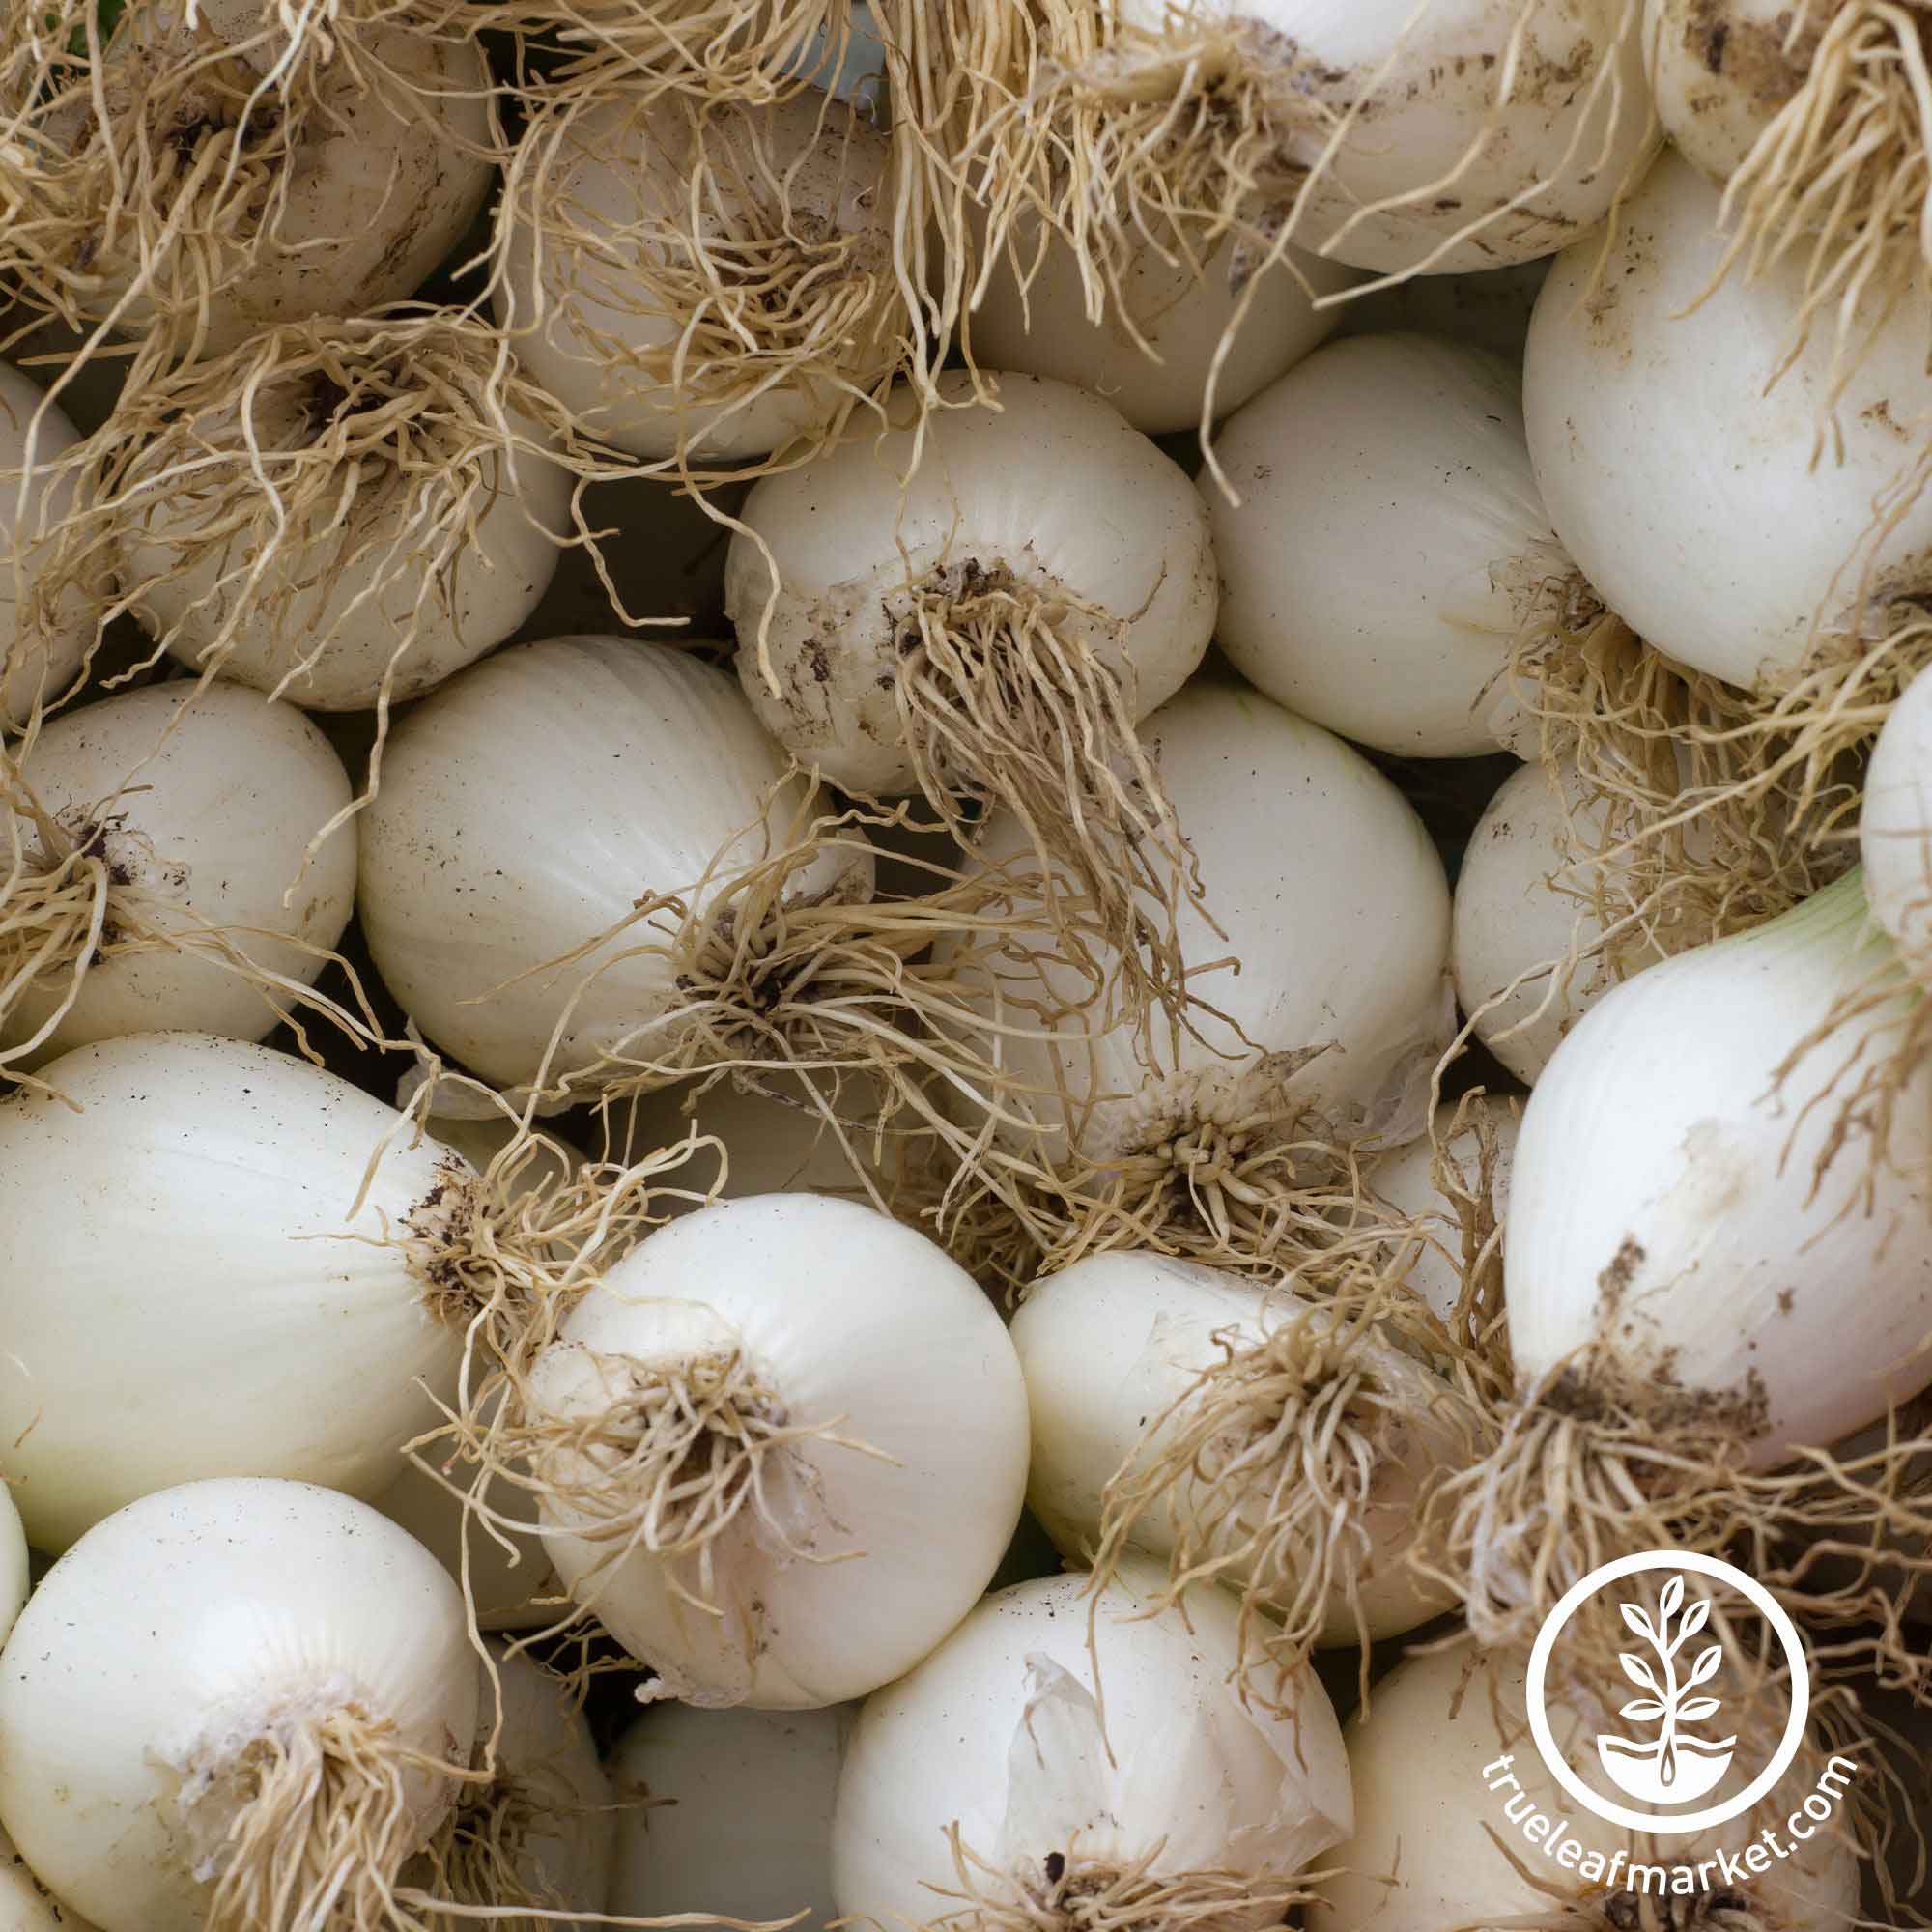 Early White Grano onion